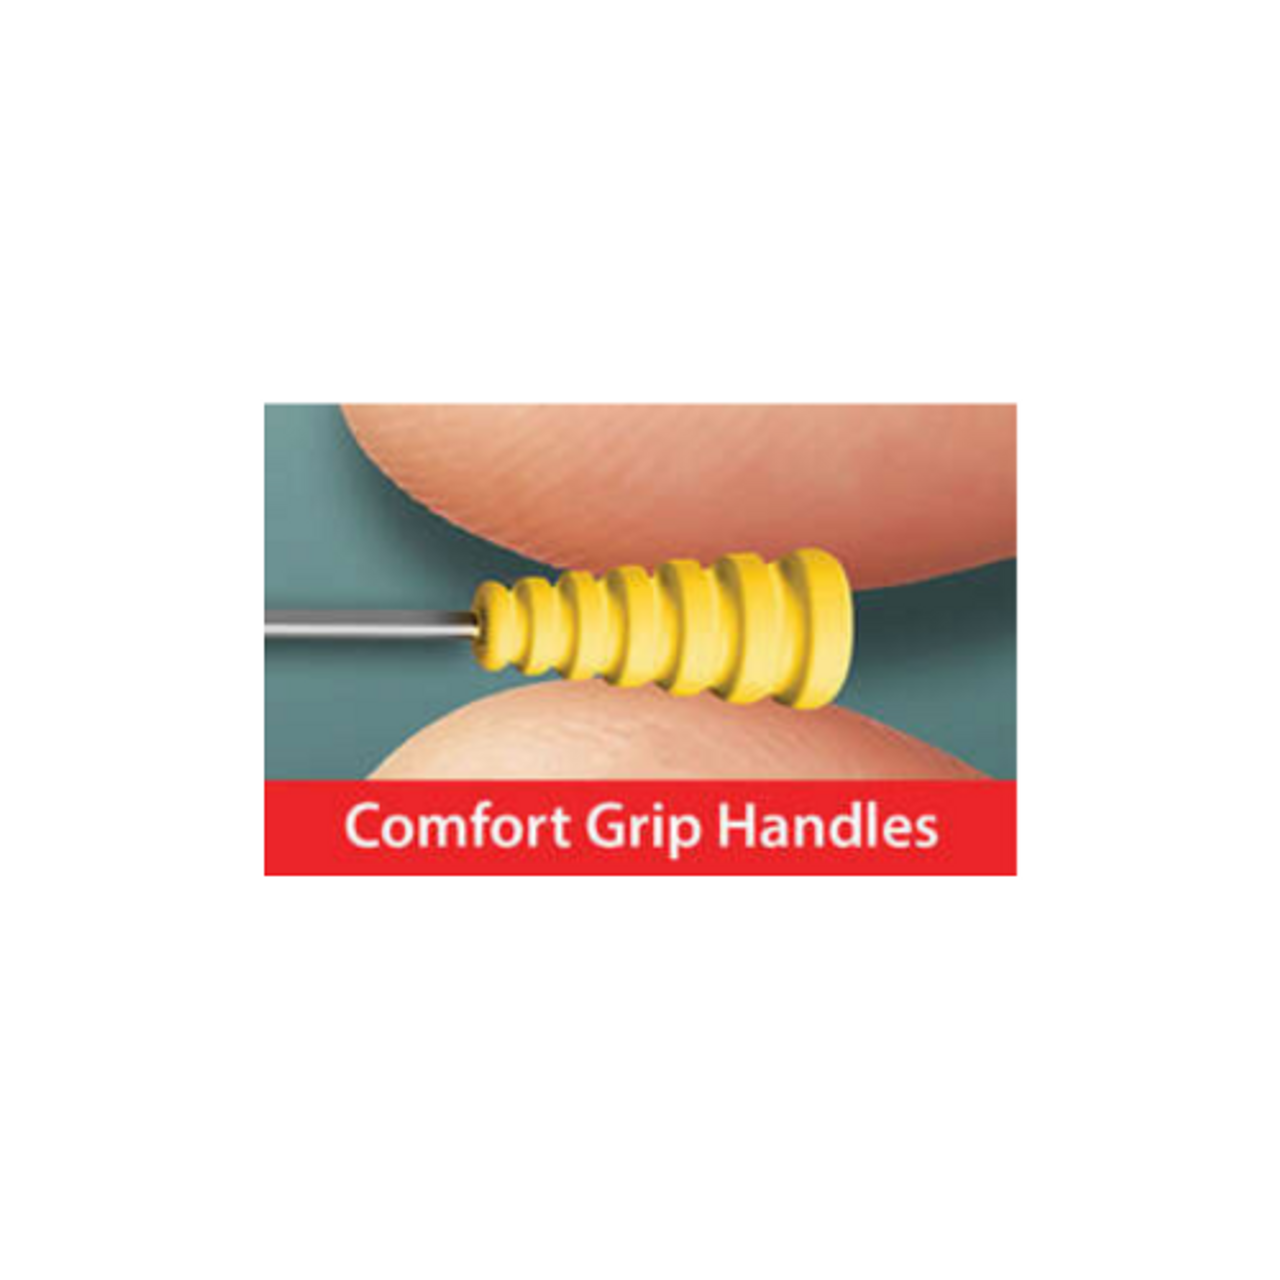 Taylor Seville Extra Fine Applique Magic Pins comfort grip handle